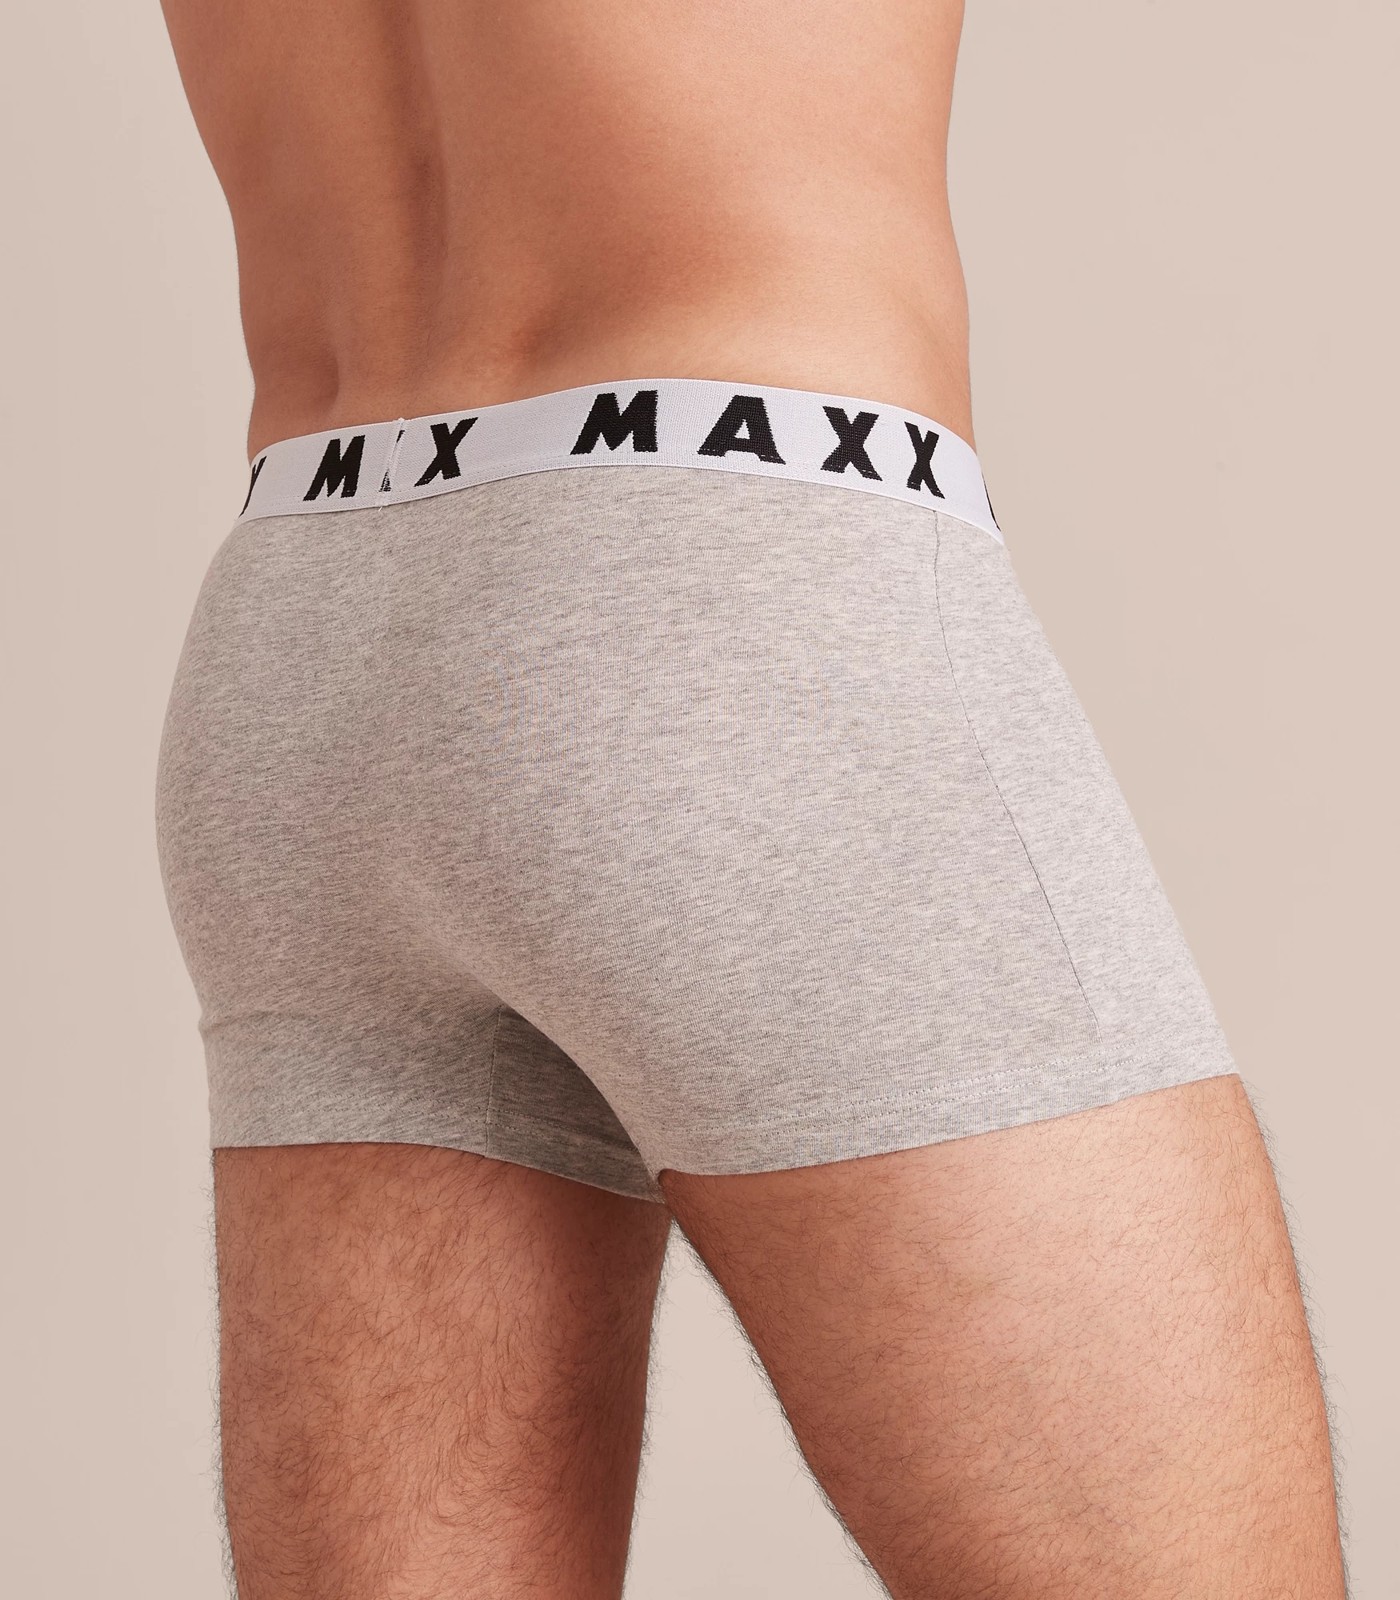 MAXX 7 Pack Trunks (Sizes Small to XXL) - $15 (Was $25) @ Target - OzBargain